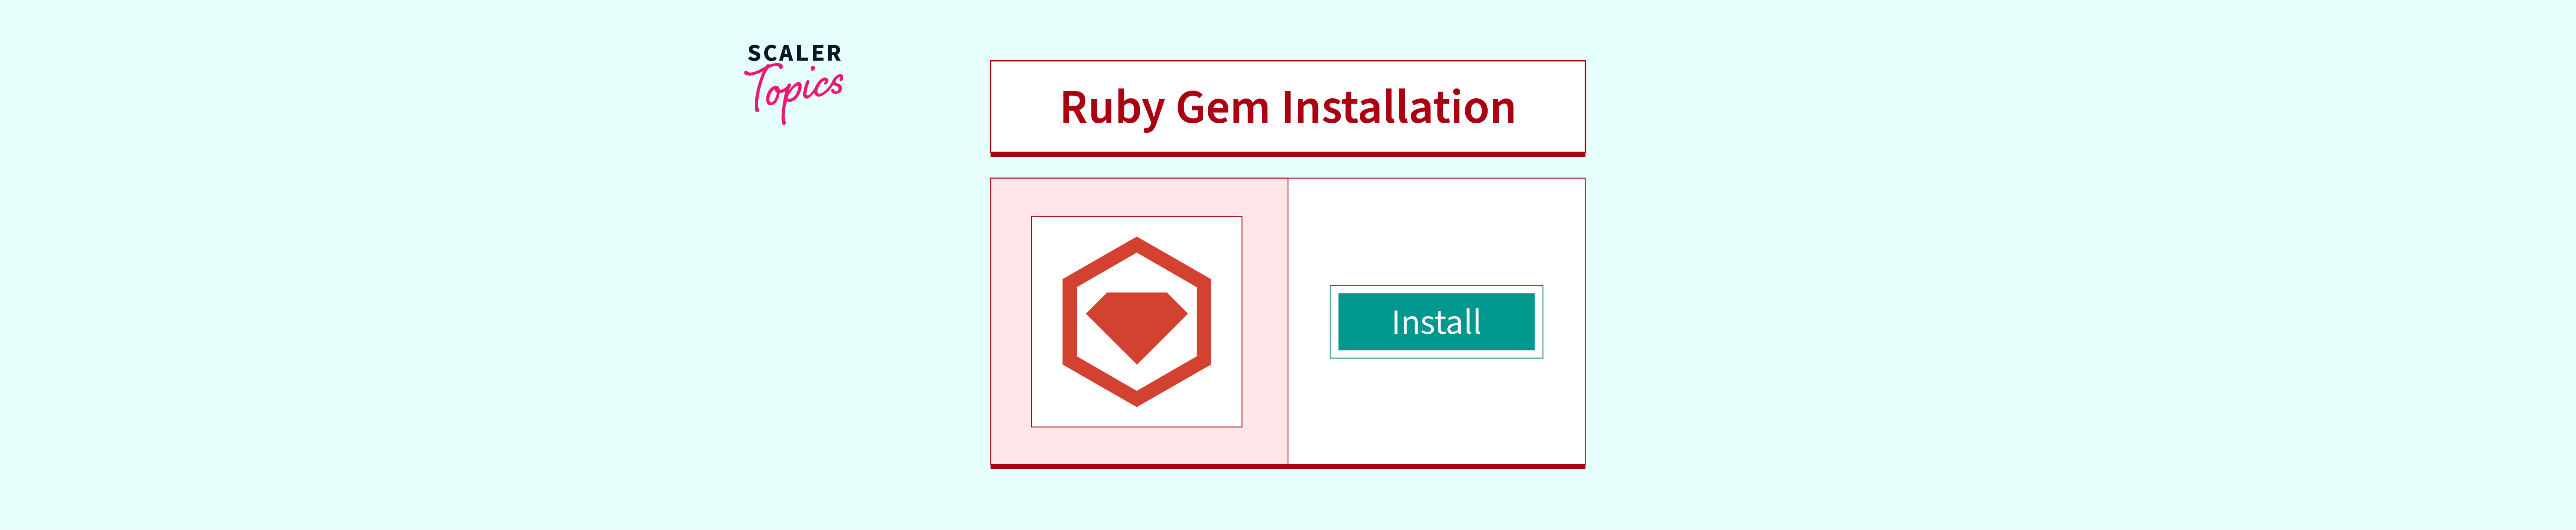 Ruby Gem Installation Scaler Topics